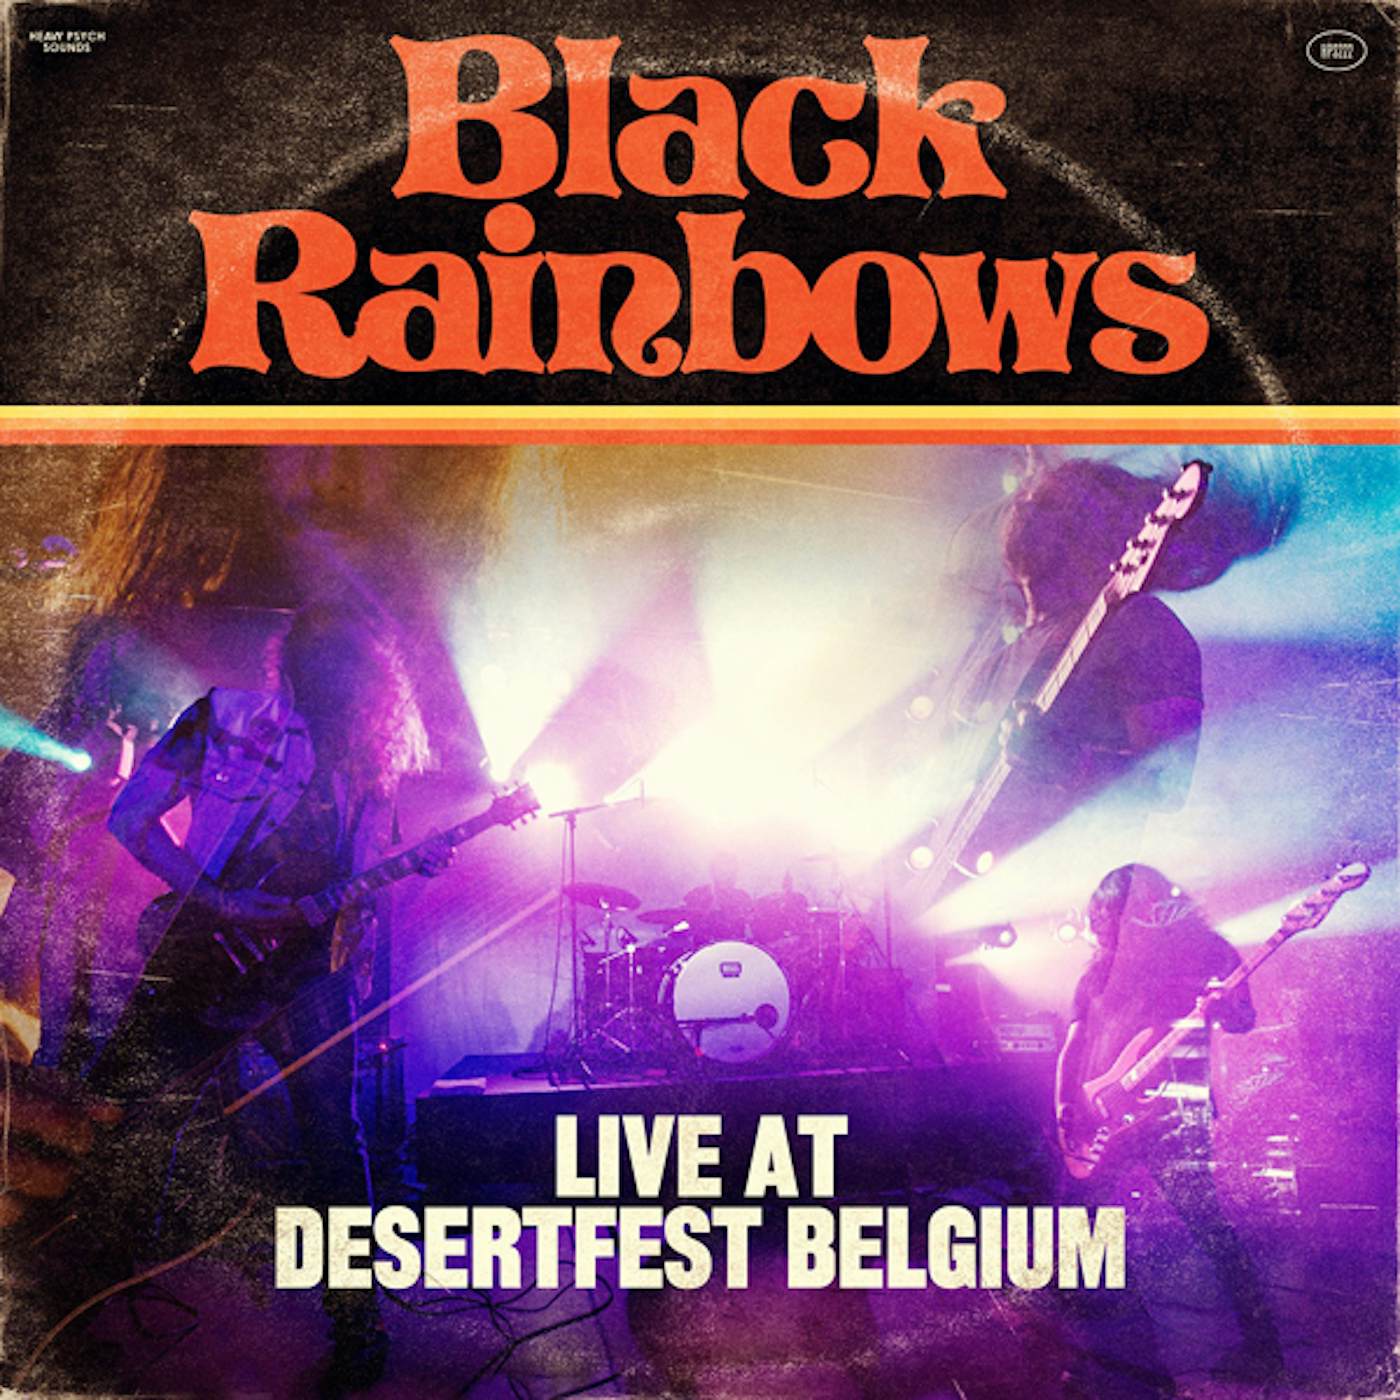 Black Rainbows Live At Desertfest Blegium (Violet) Vinyl Record